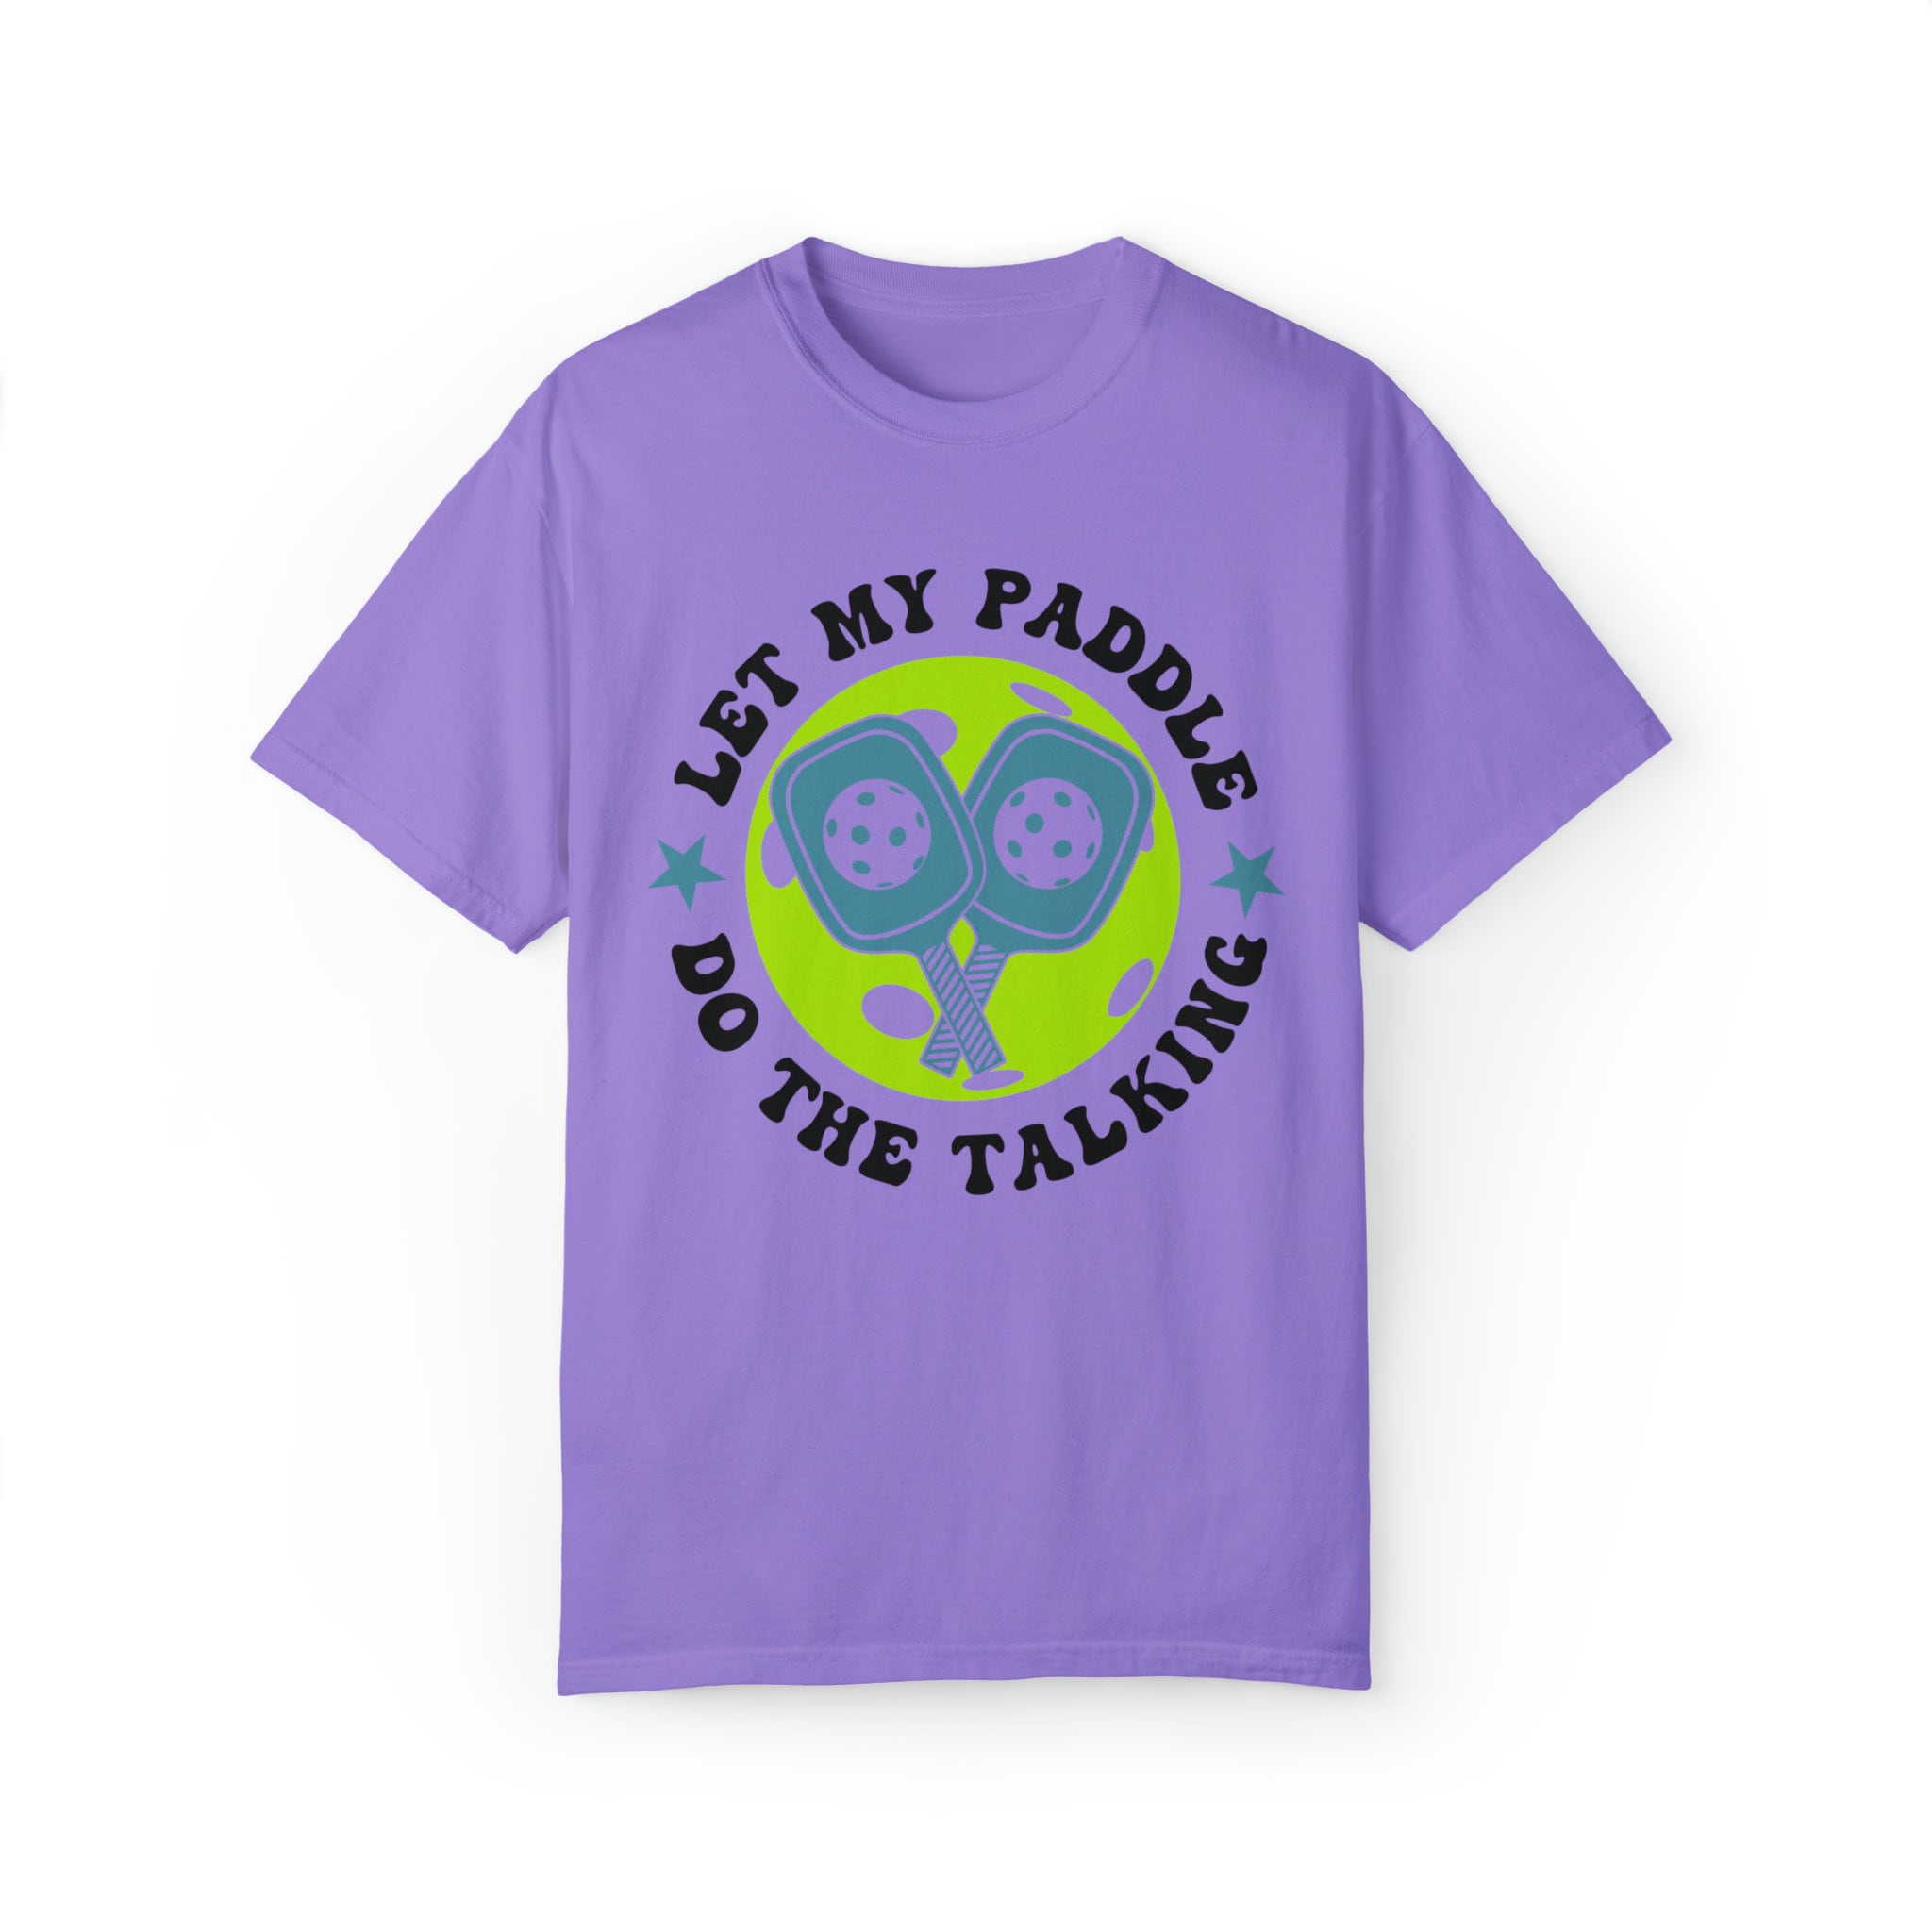 Let My Paddle Do the Talking Shirt, Pickleball Tee, Gift for Pickleball Lover Friend